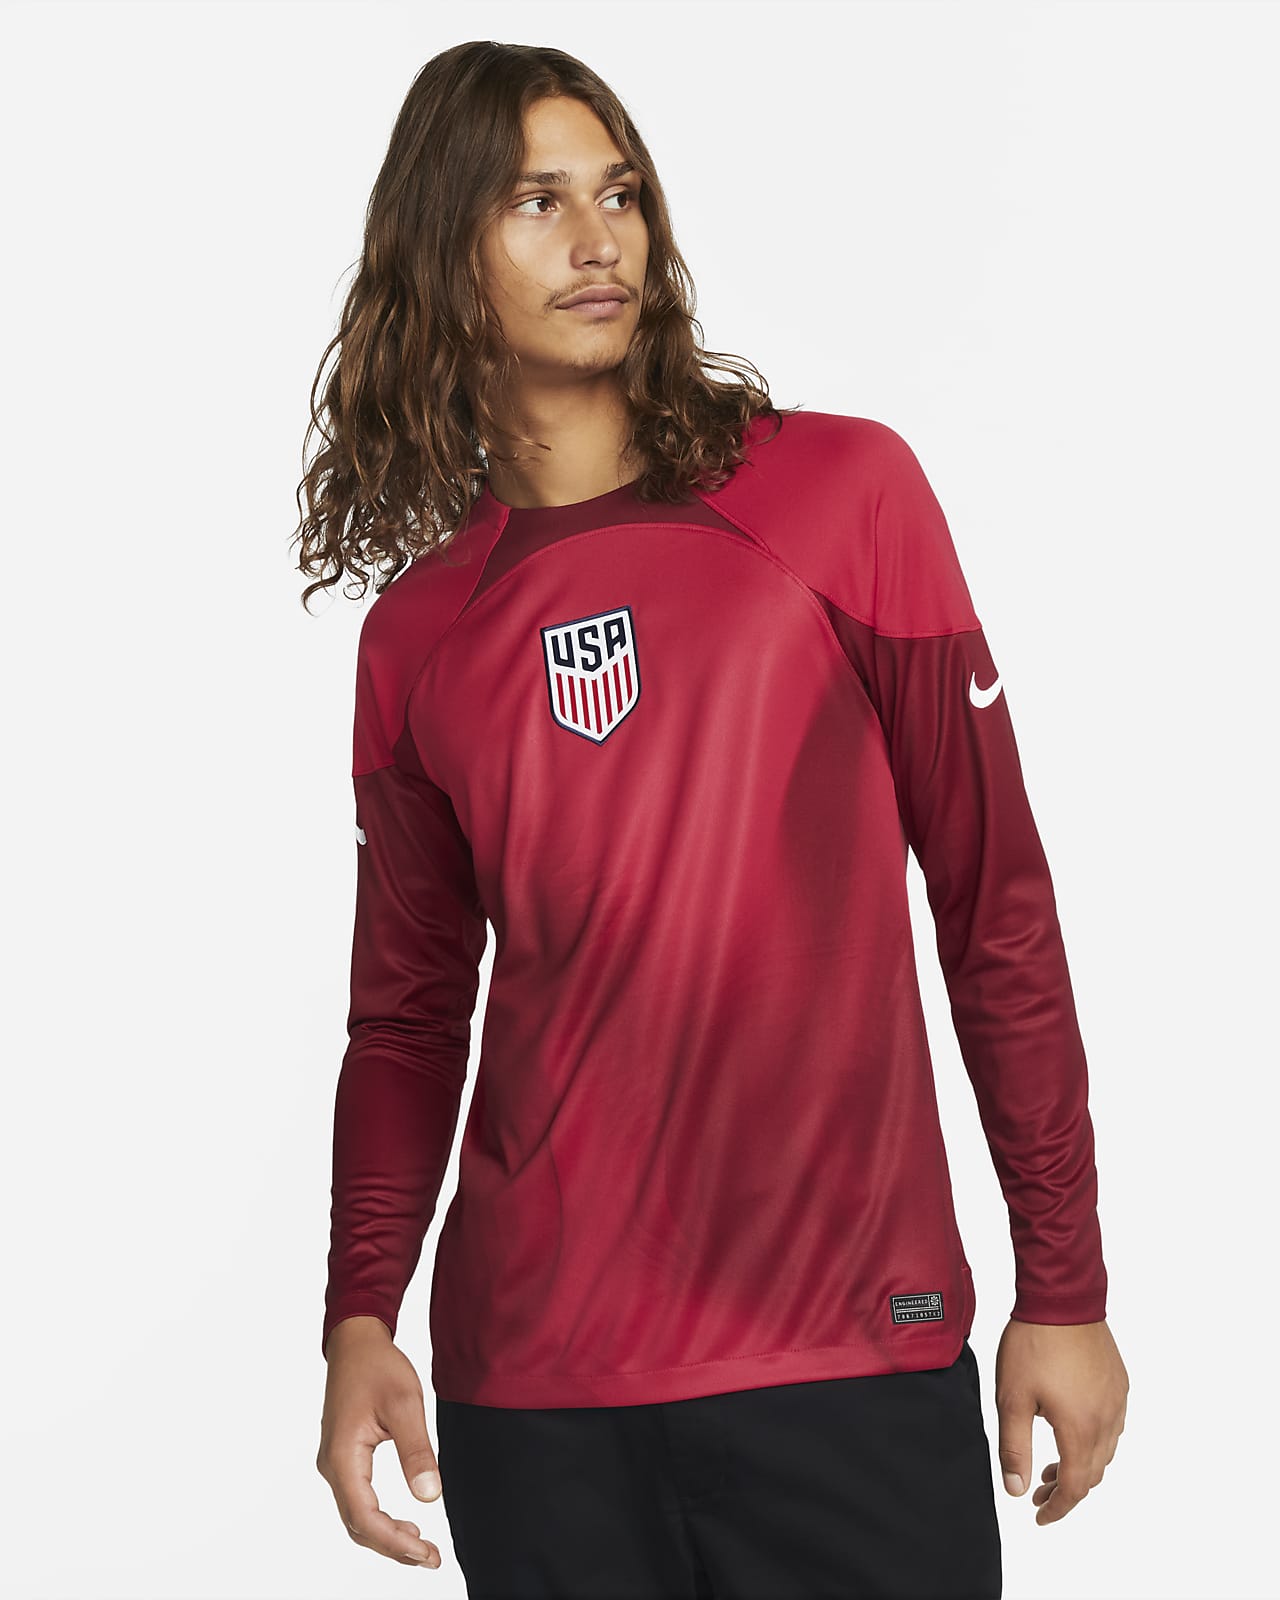 Jersey de fútbol Nike de EE. UU. portero 2022/23 Stadium para hombre. Nike.com